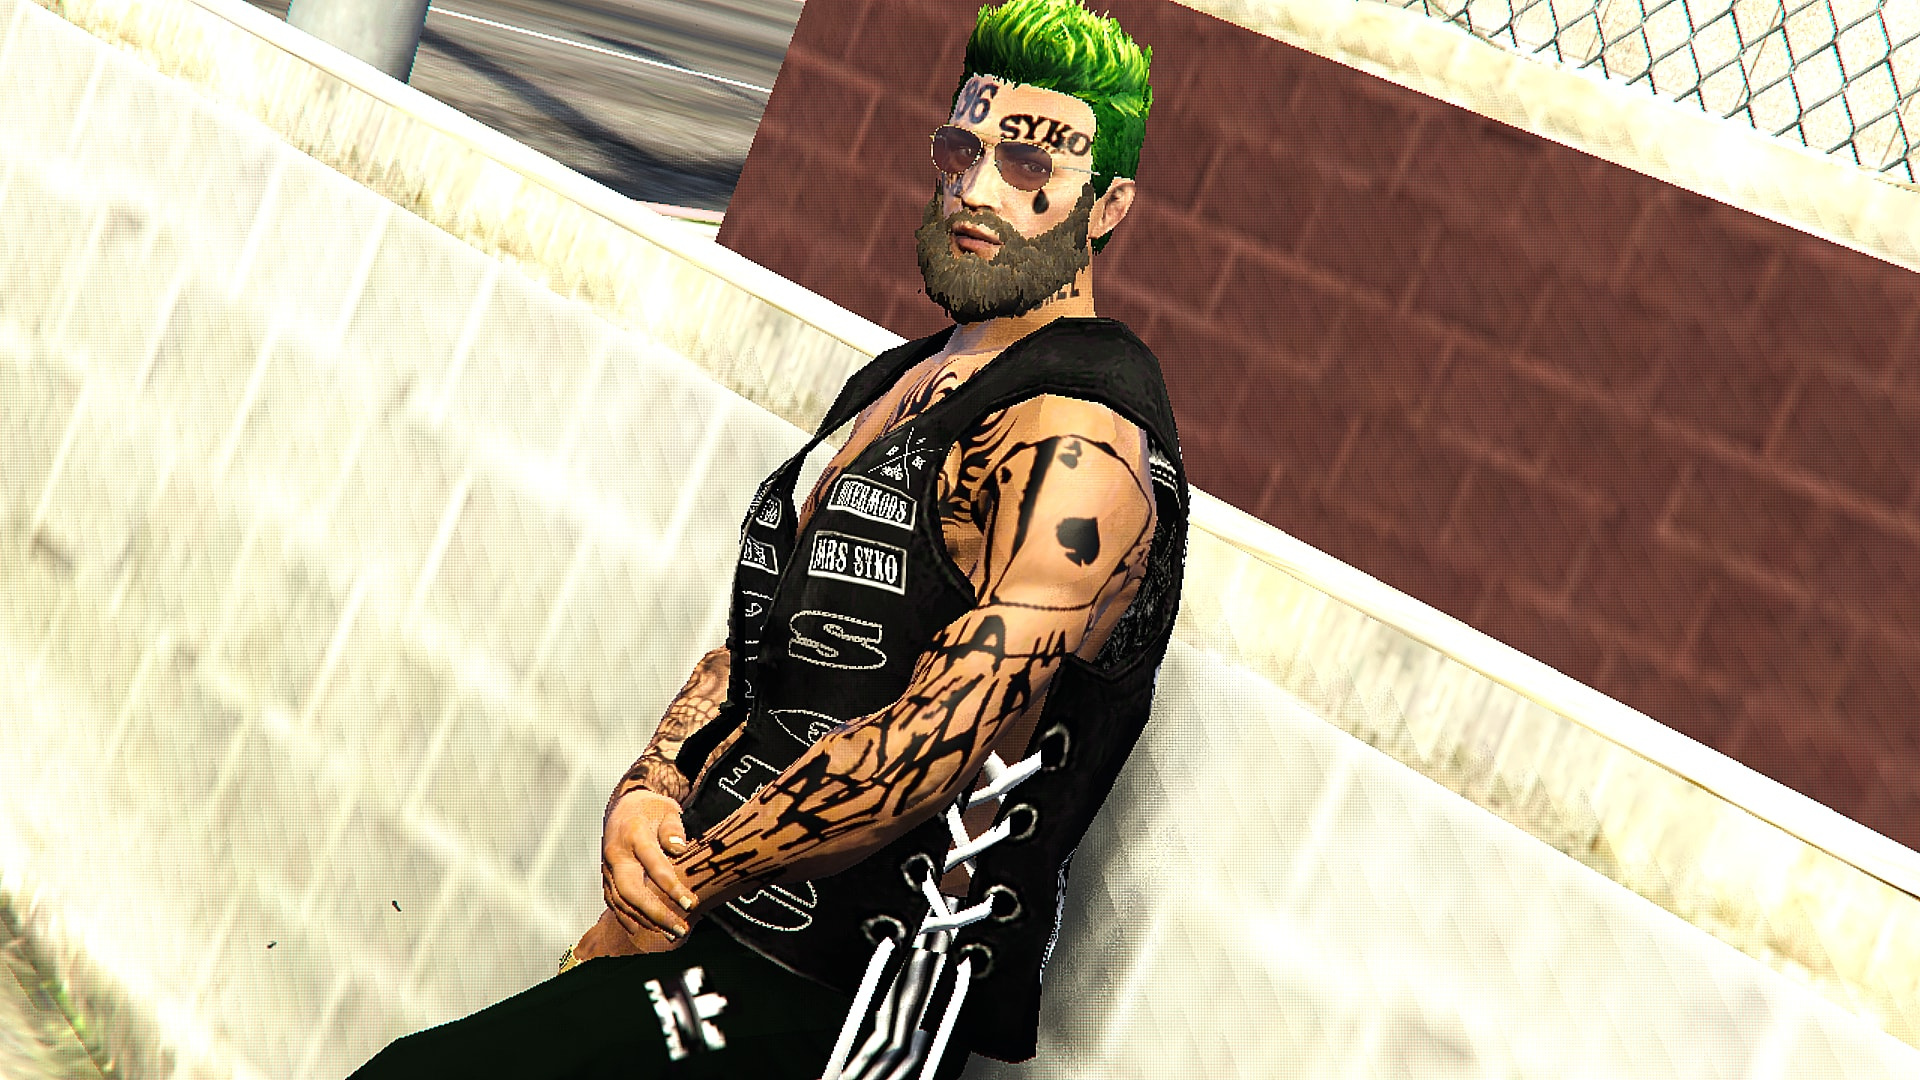 Joker Abs Chest Tattootransparent Background - Roblox Camisetas De